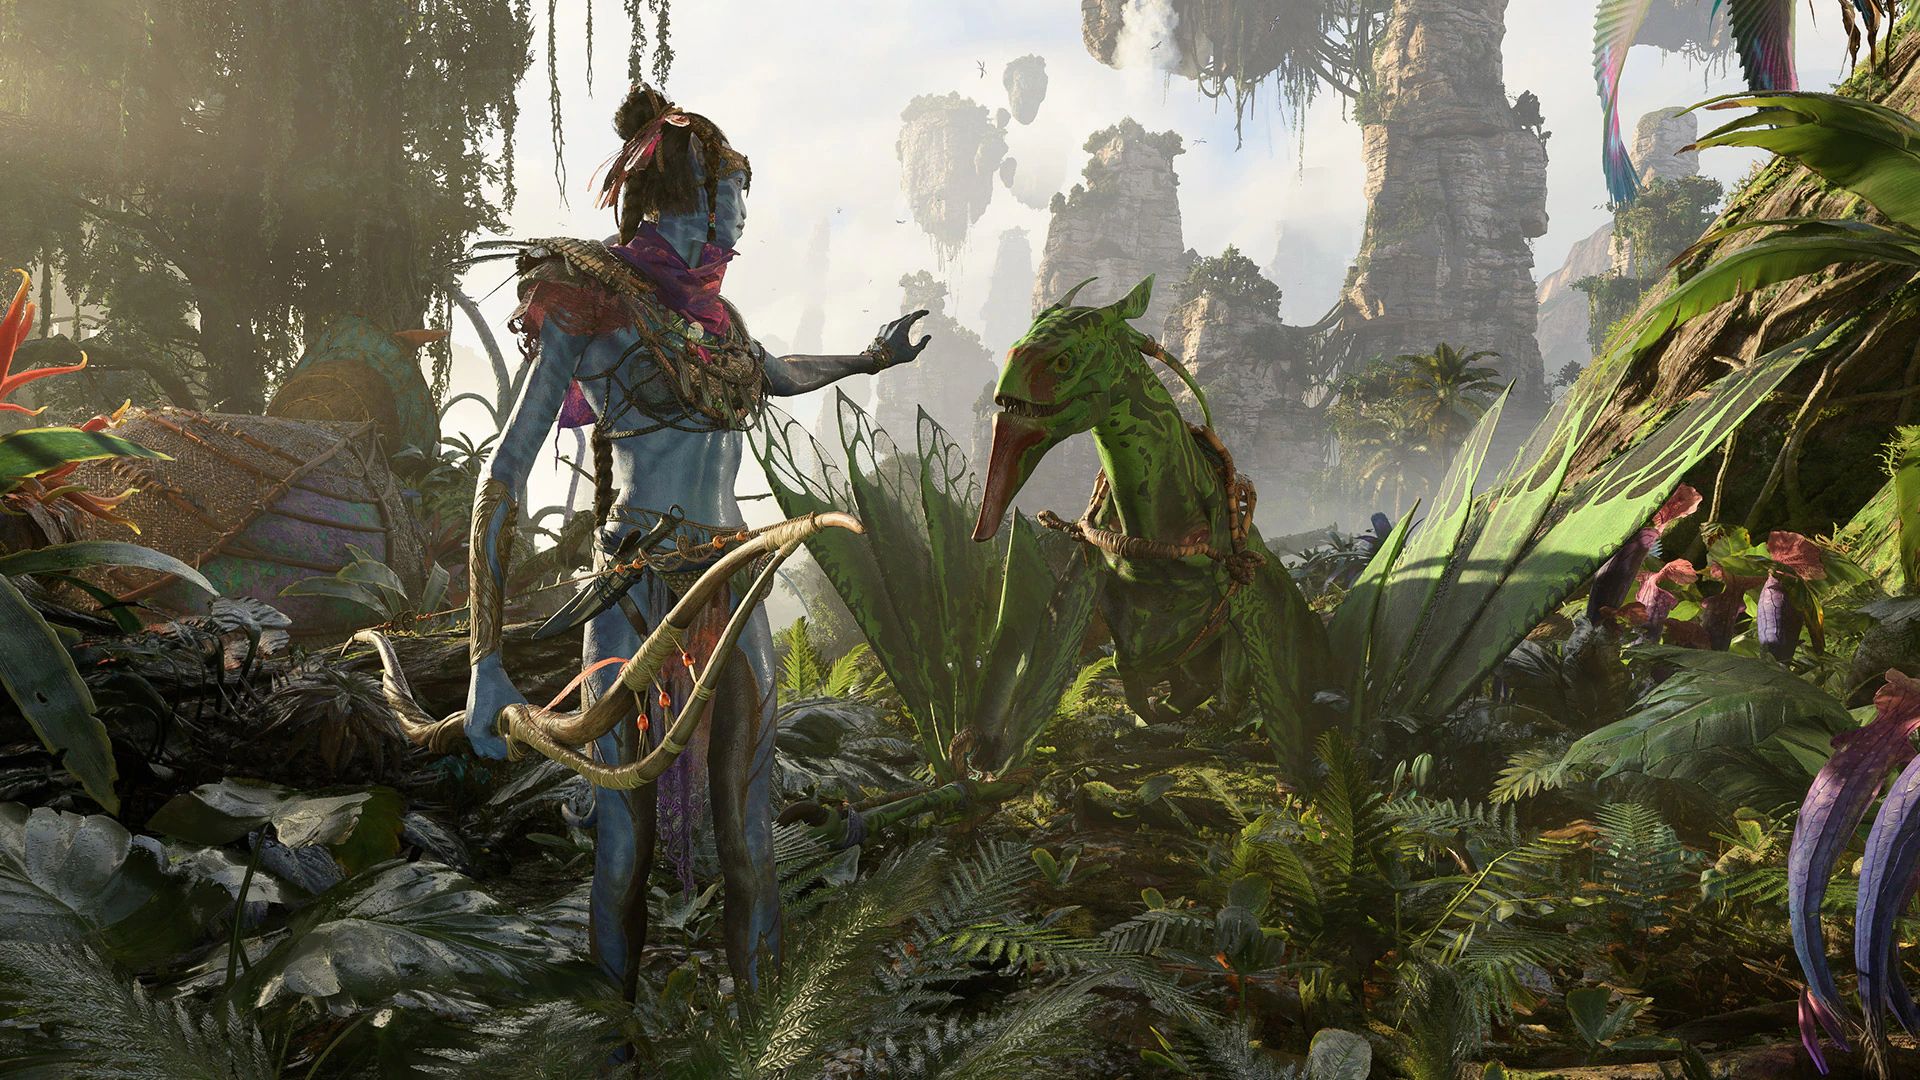 Avatar: Frontiers of Pandora - grafika promująca grę